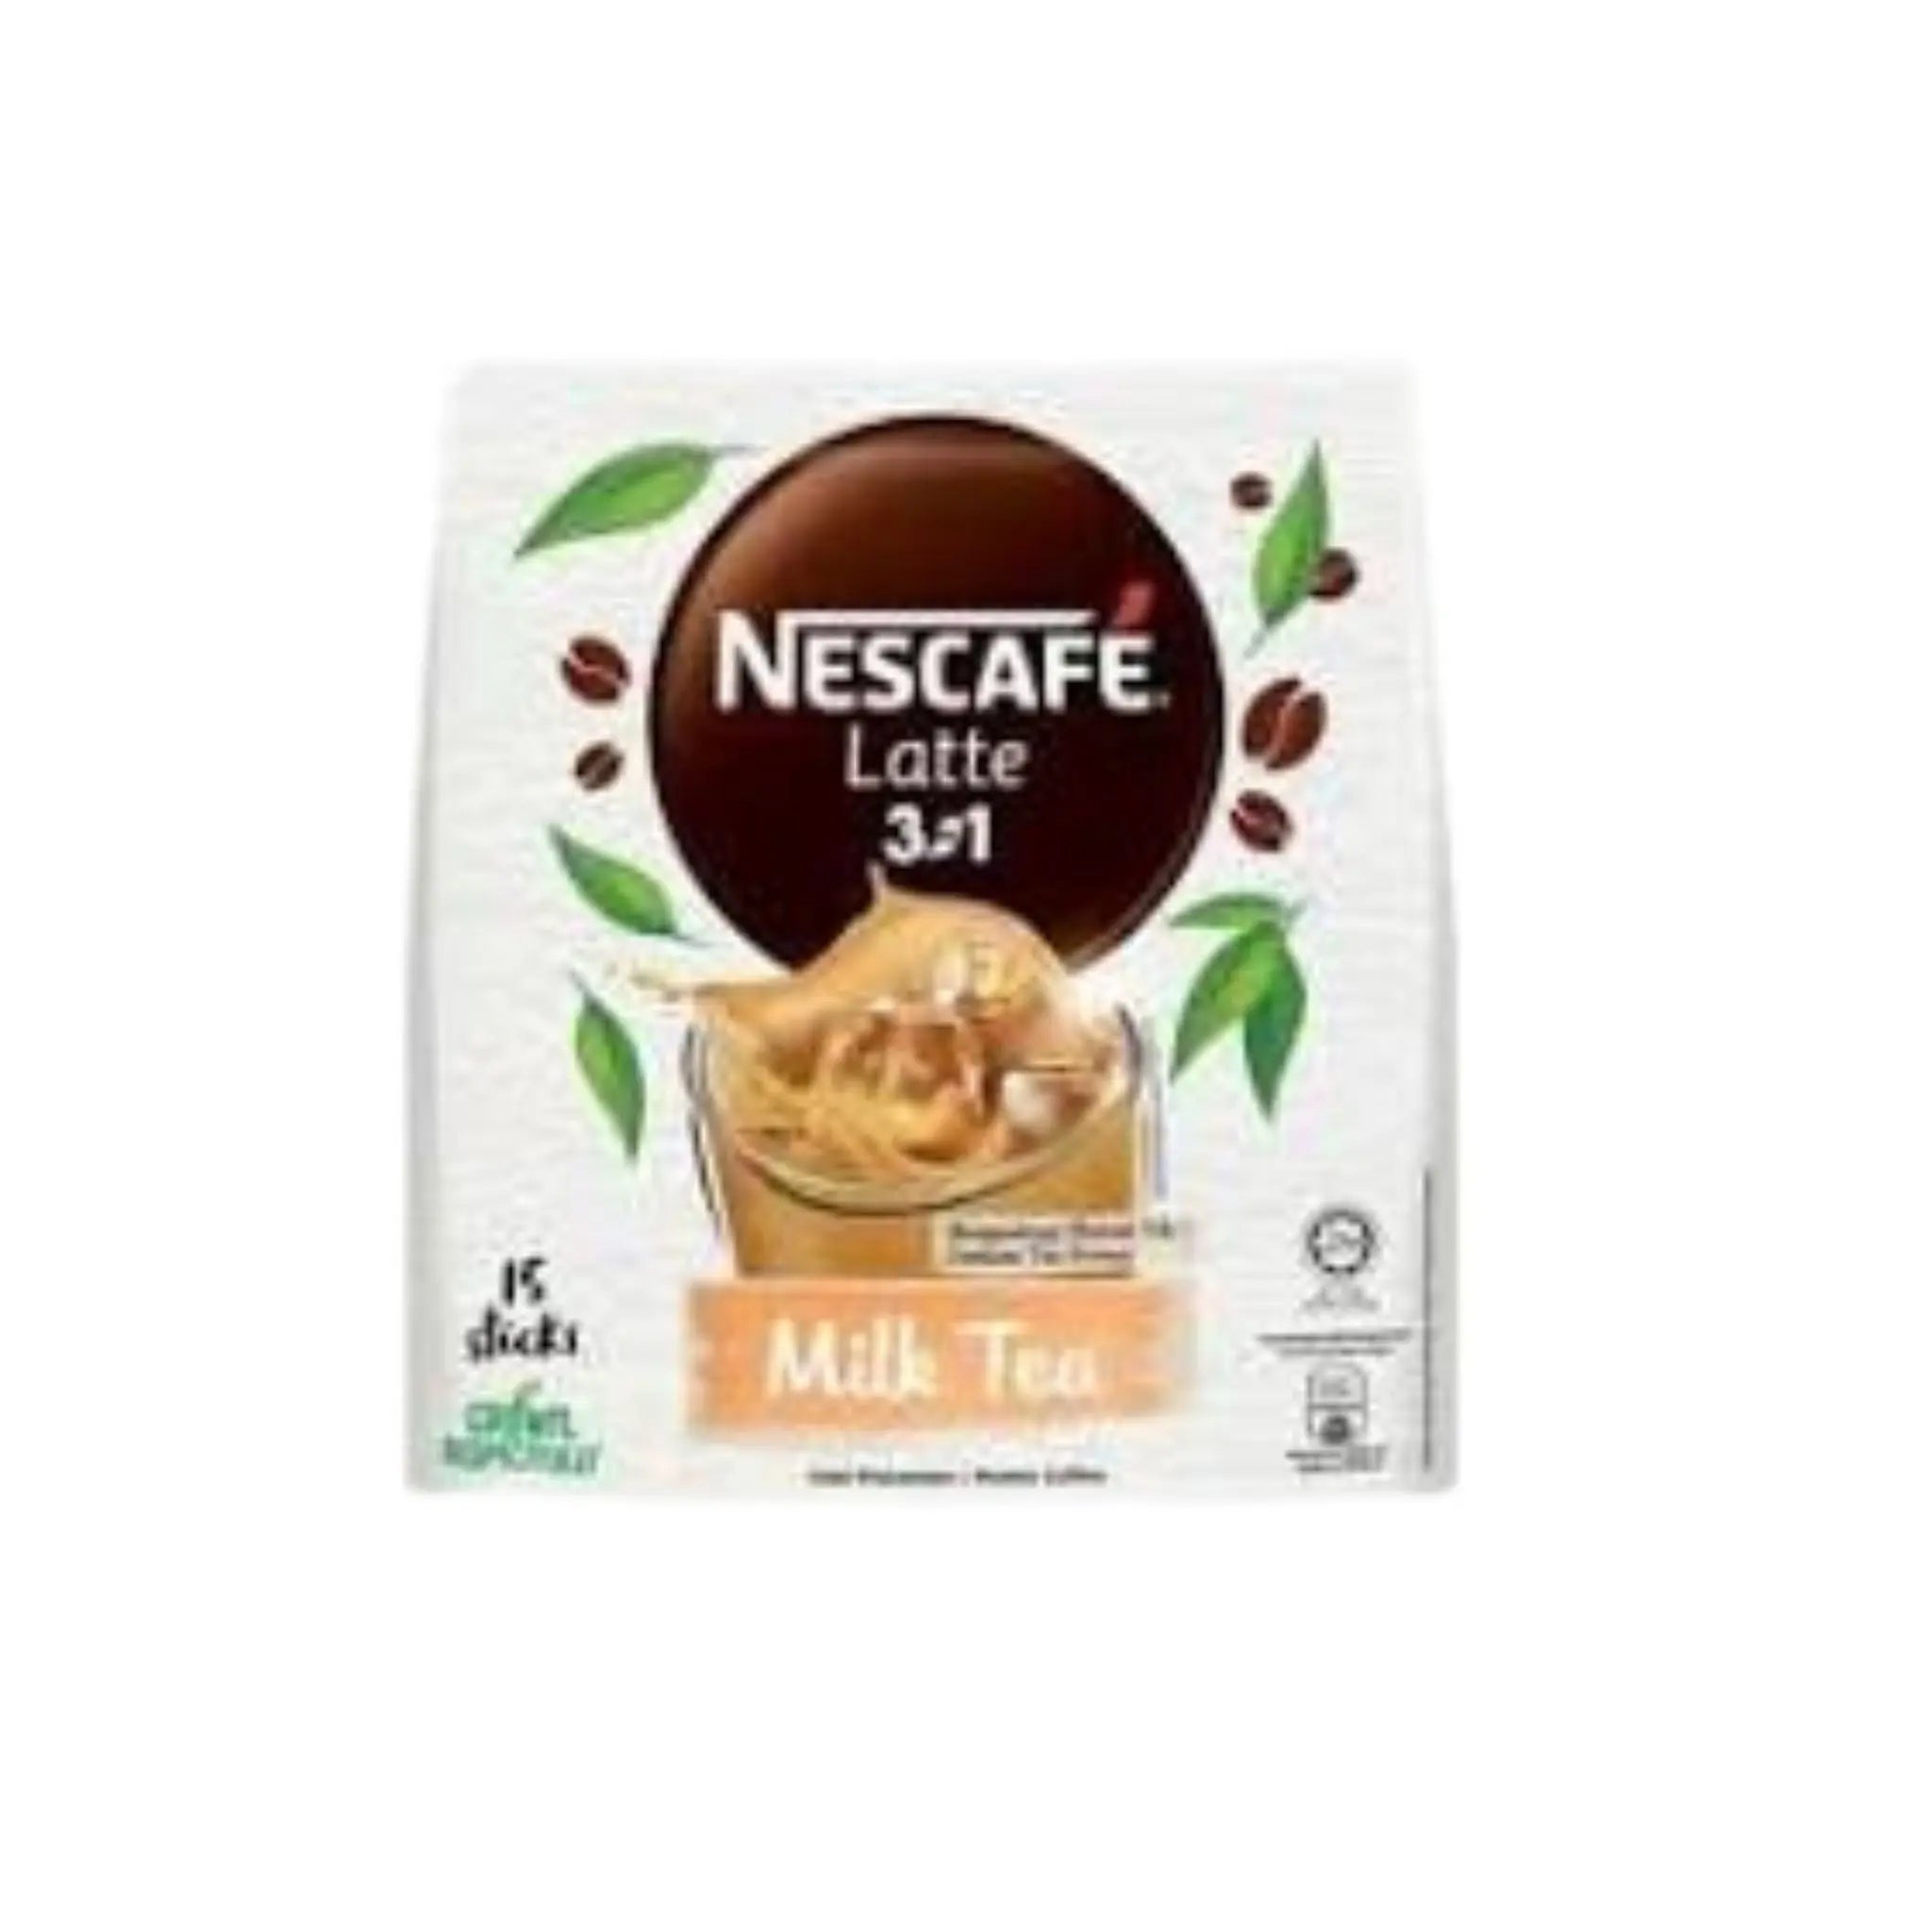 Nescafe 3in1 Latte Milk Tea - 24x15x25g (1 carton) - Marino.AE